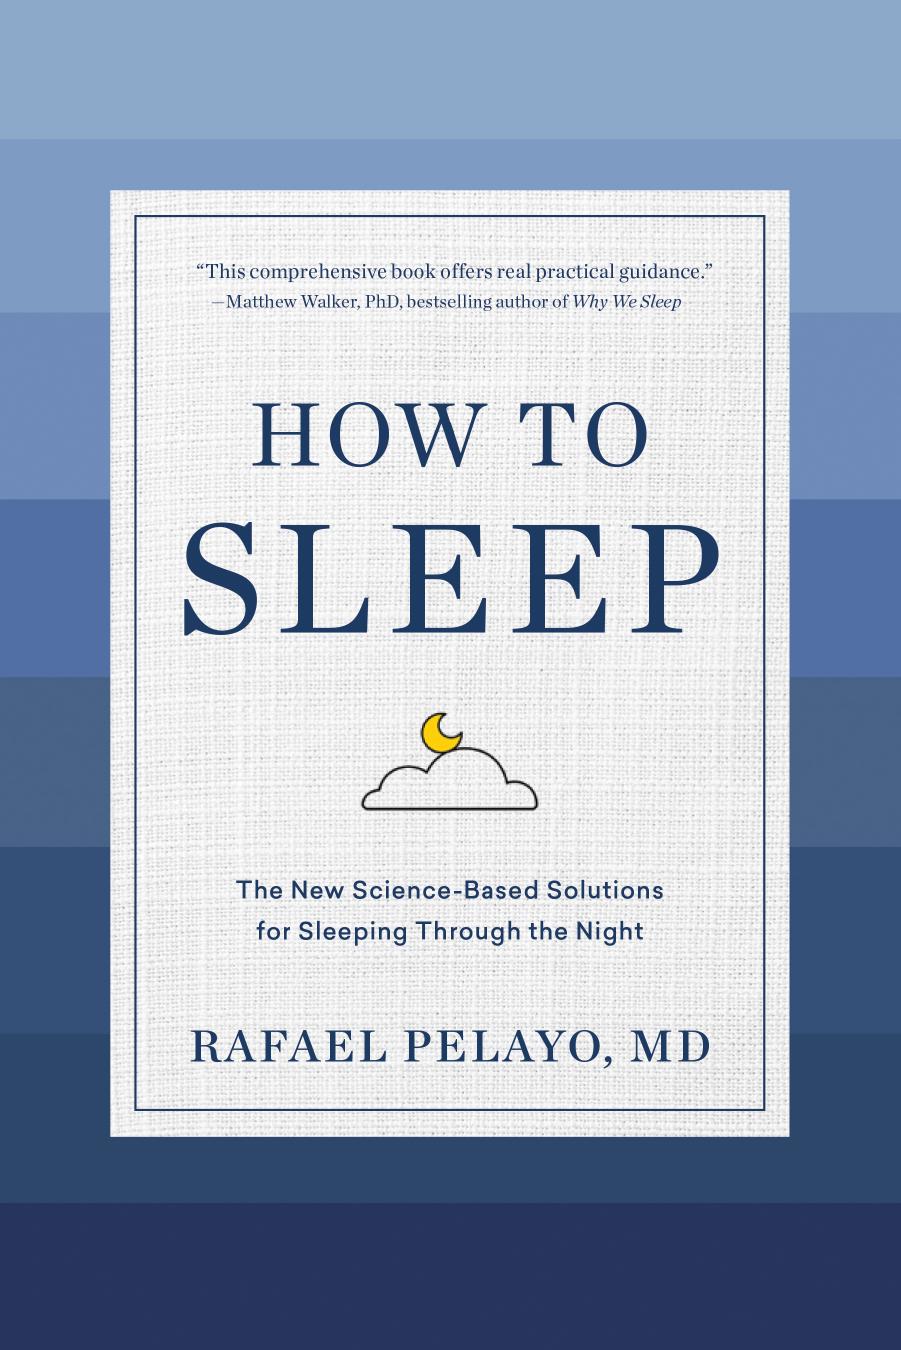 How to Sleep by Rafael Pelayo